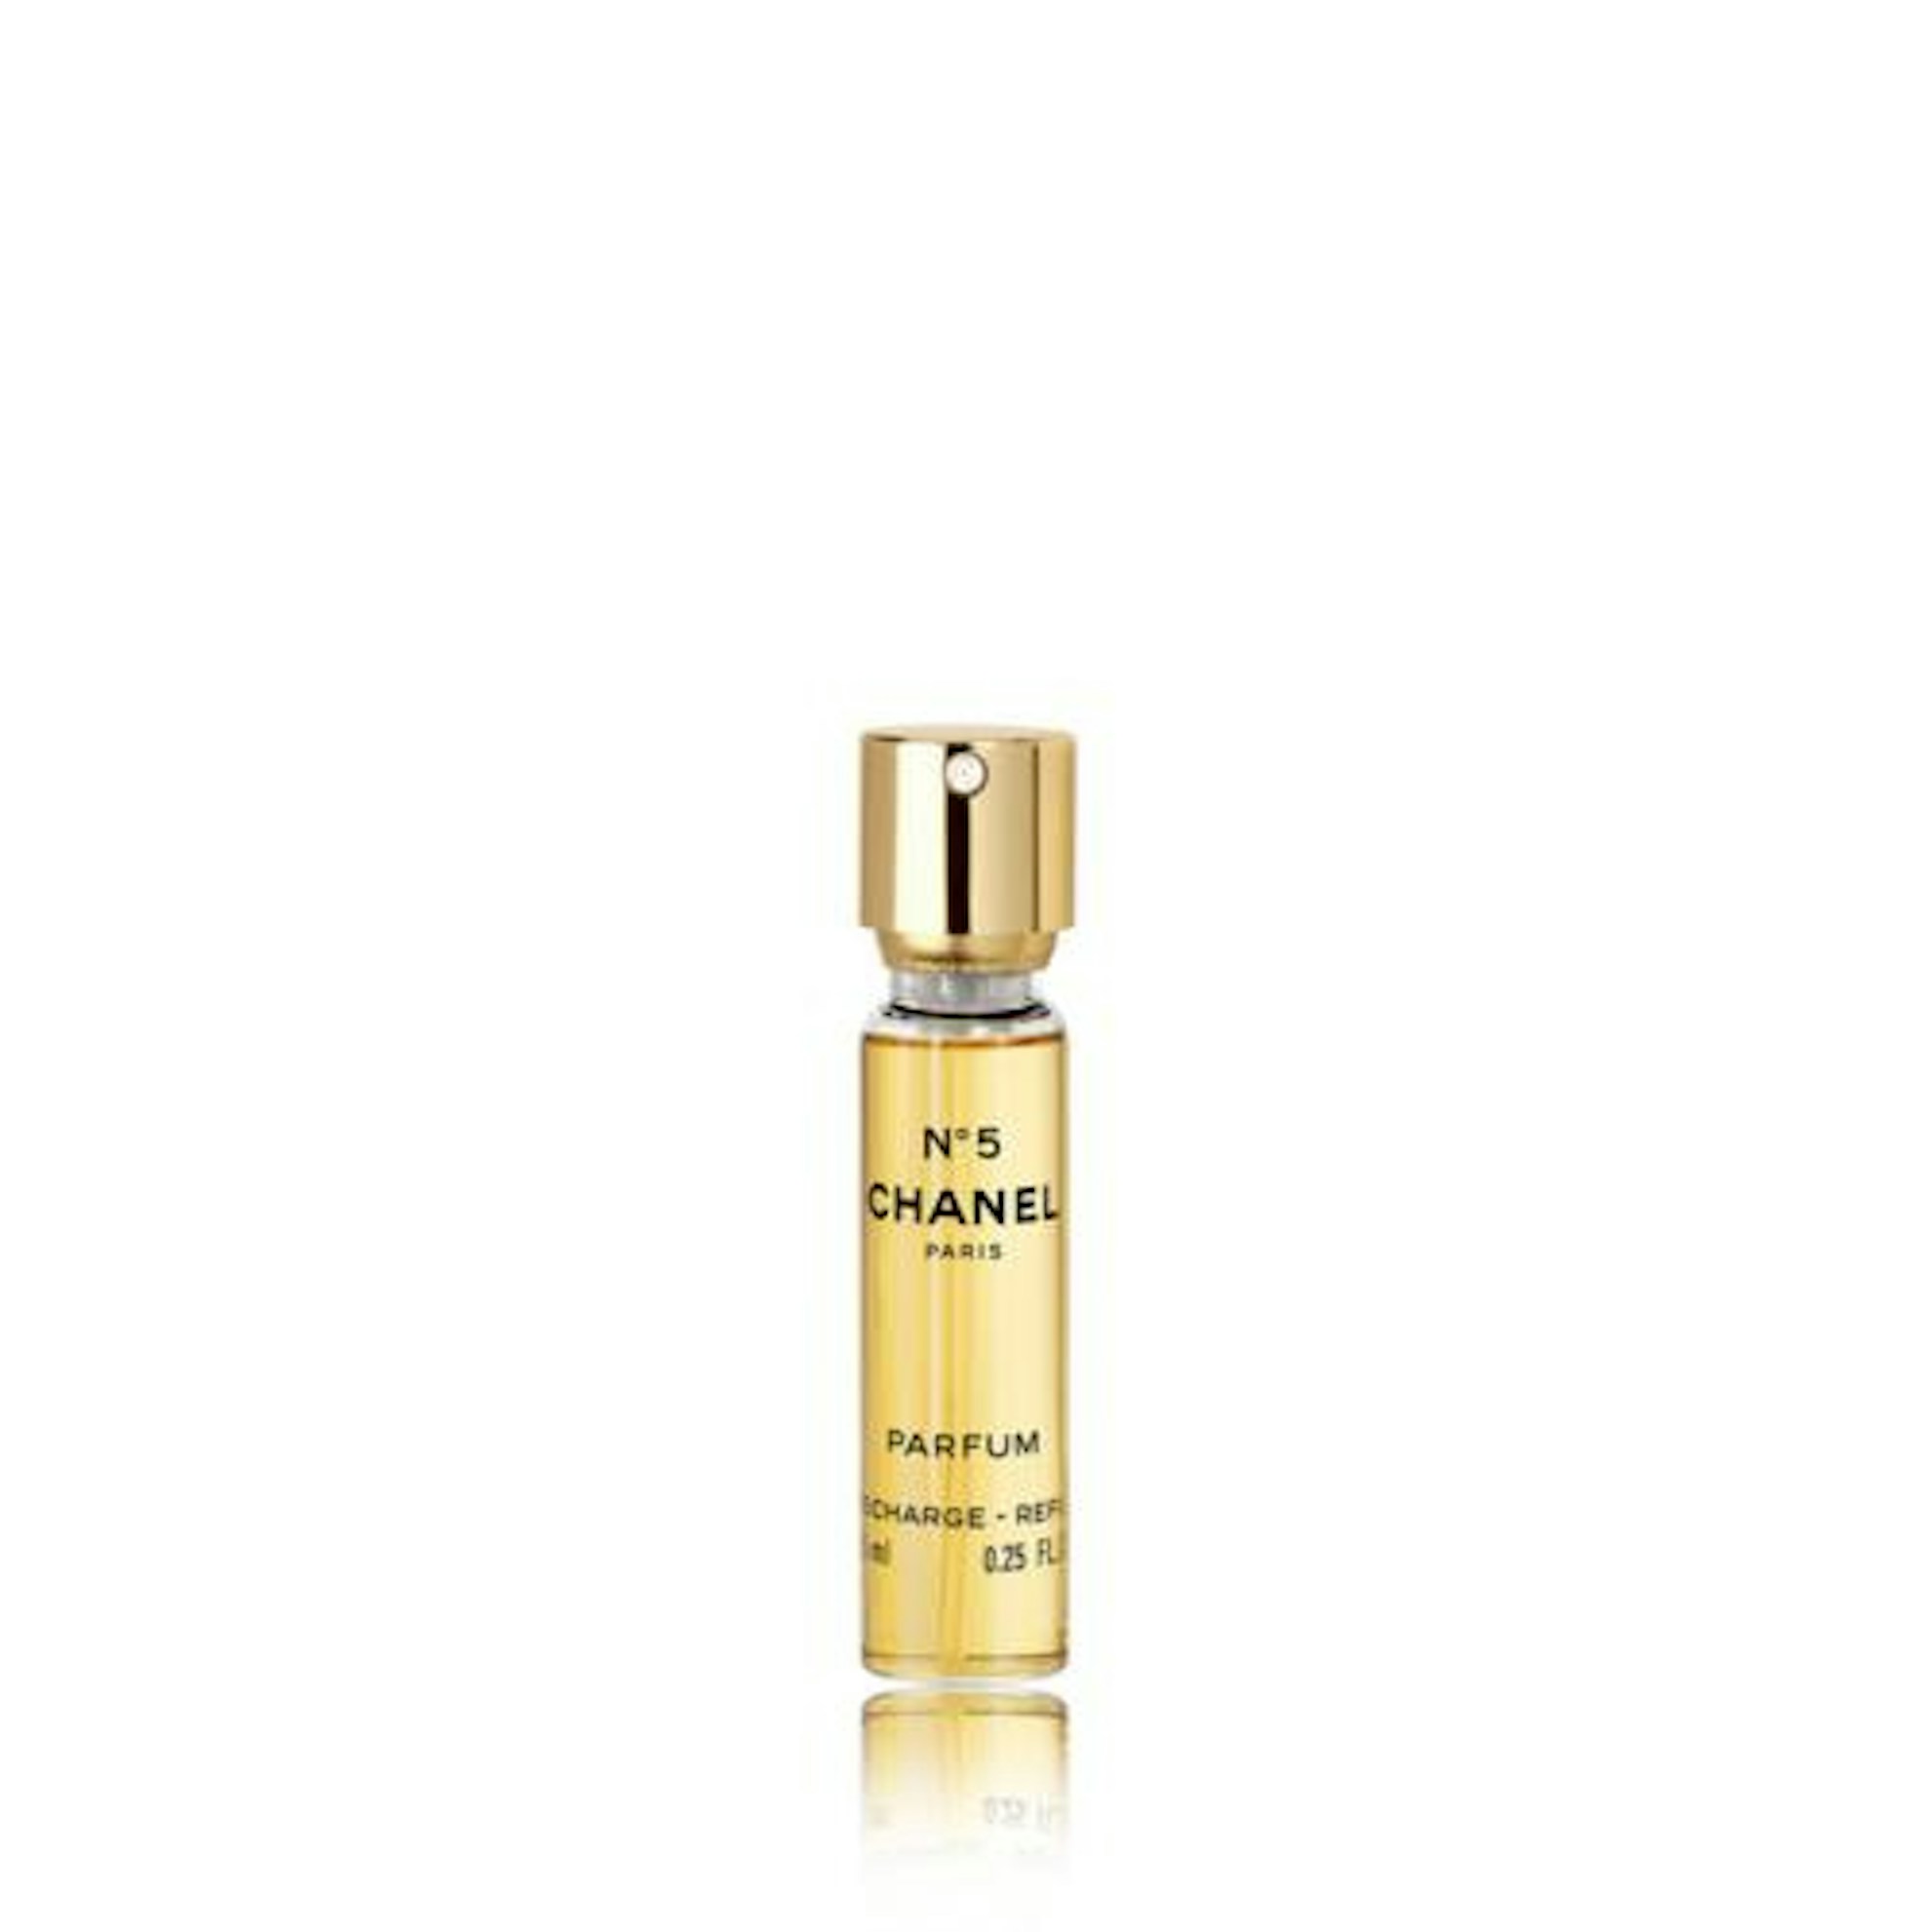 CHANEL Parfum Purse Spray Refill 7.5ml